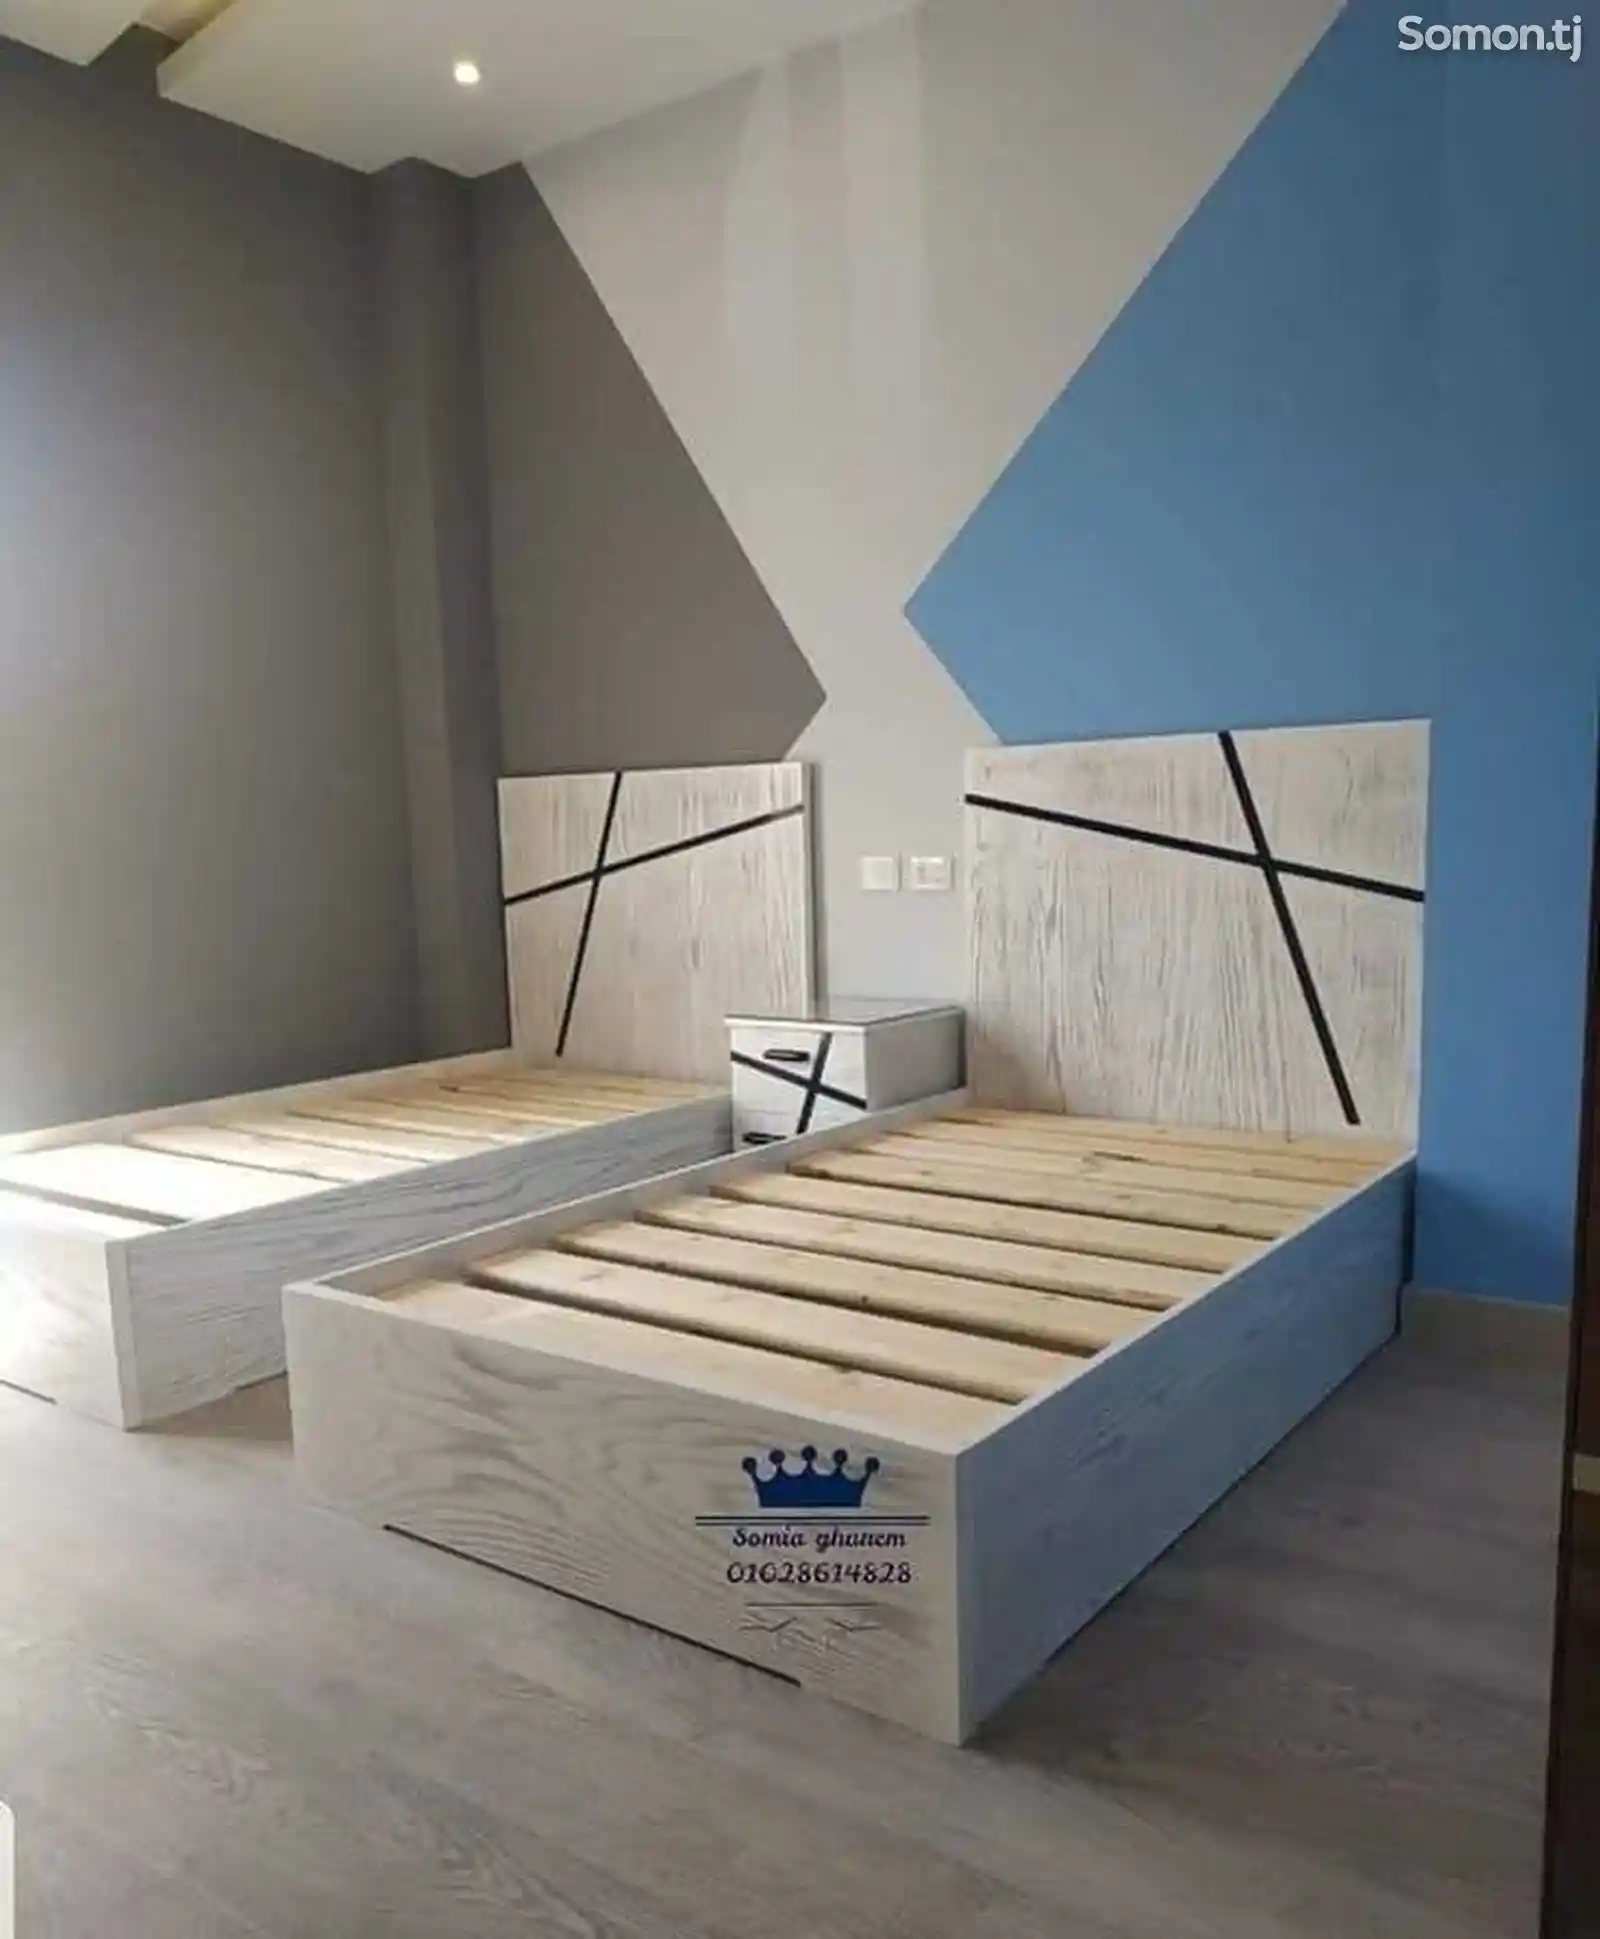 Мебель для спальни на заказ-2